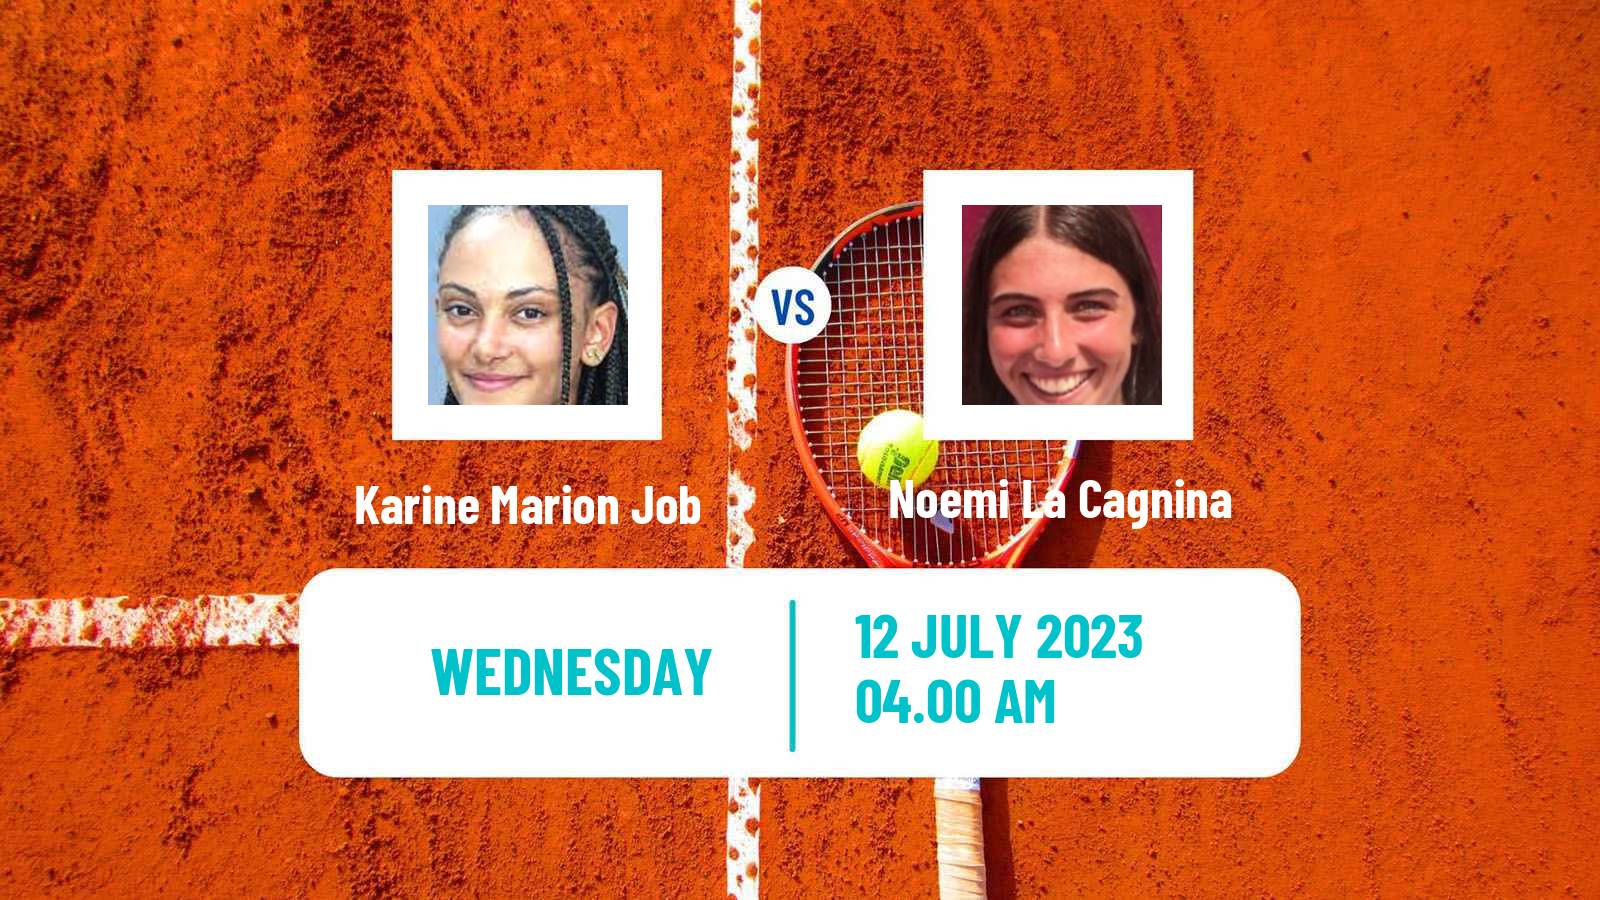 Tennis ITF W15 Monastir 23 Women Karine Marion Job - Noemi La Cagnina